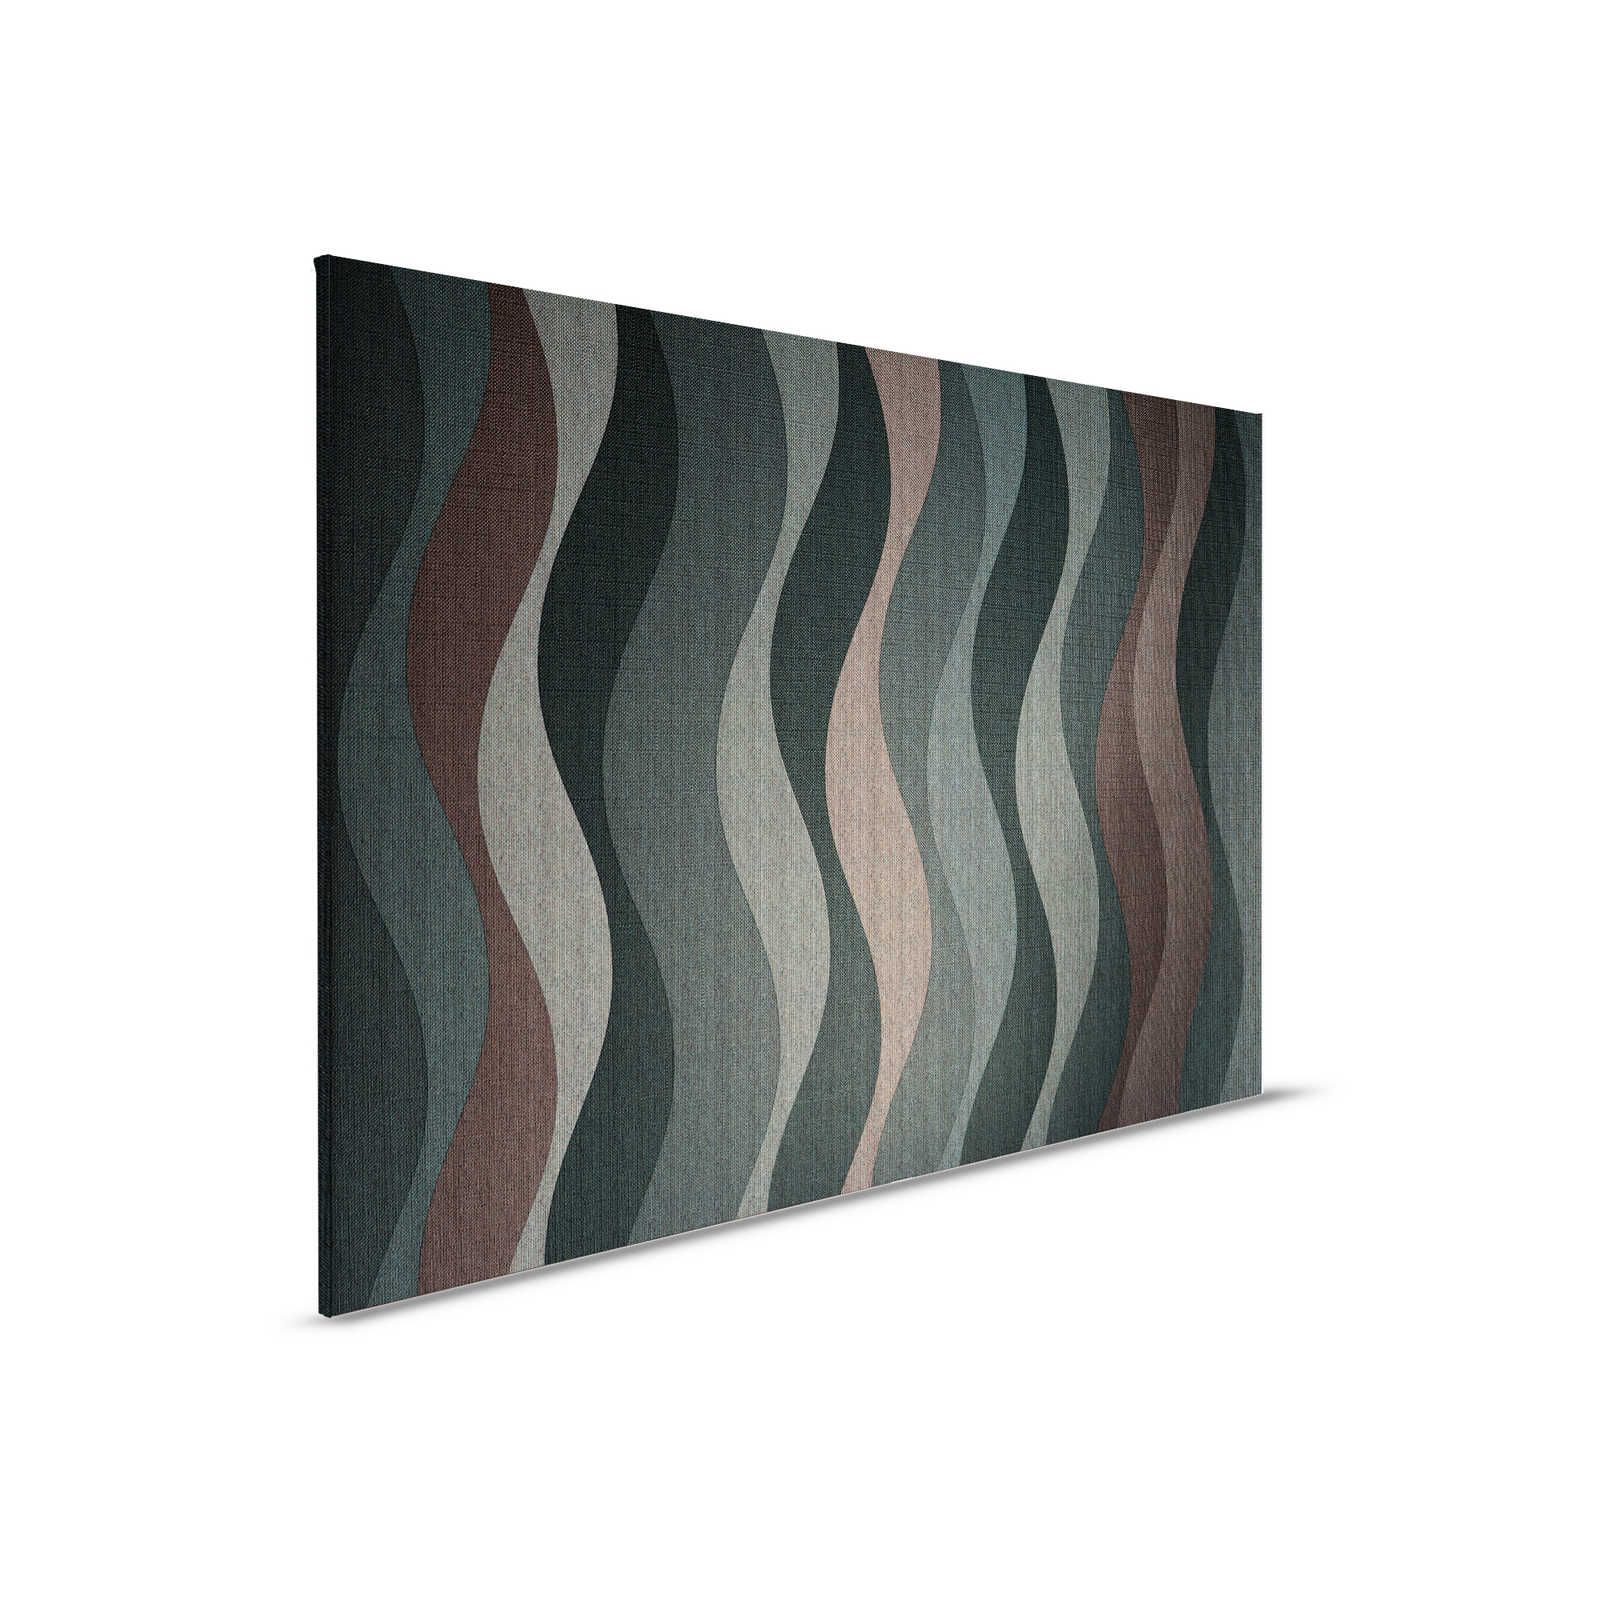         Savoy 1 - Dark Canvas painting Retro Graphic Waves Pattern - 0.90 m x 0.60 m
    